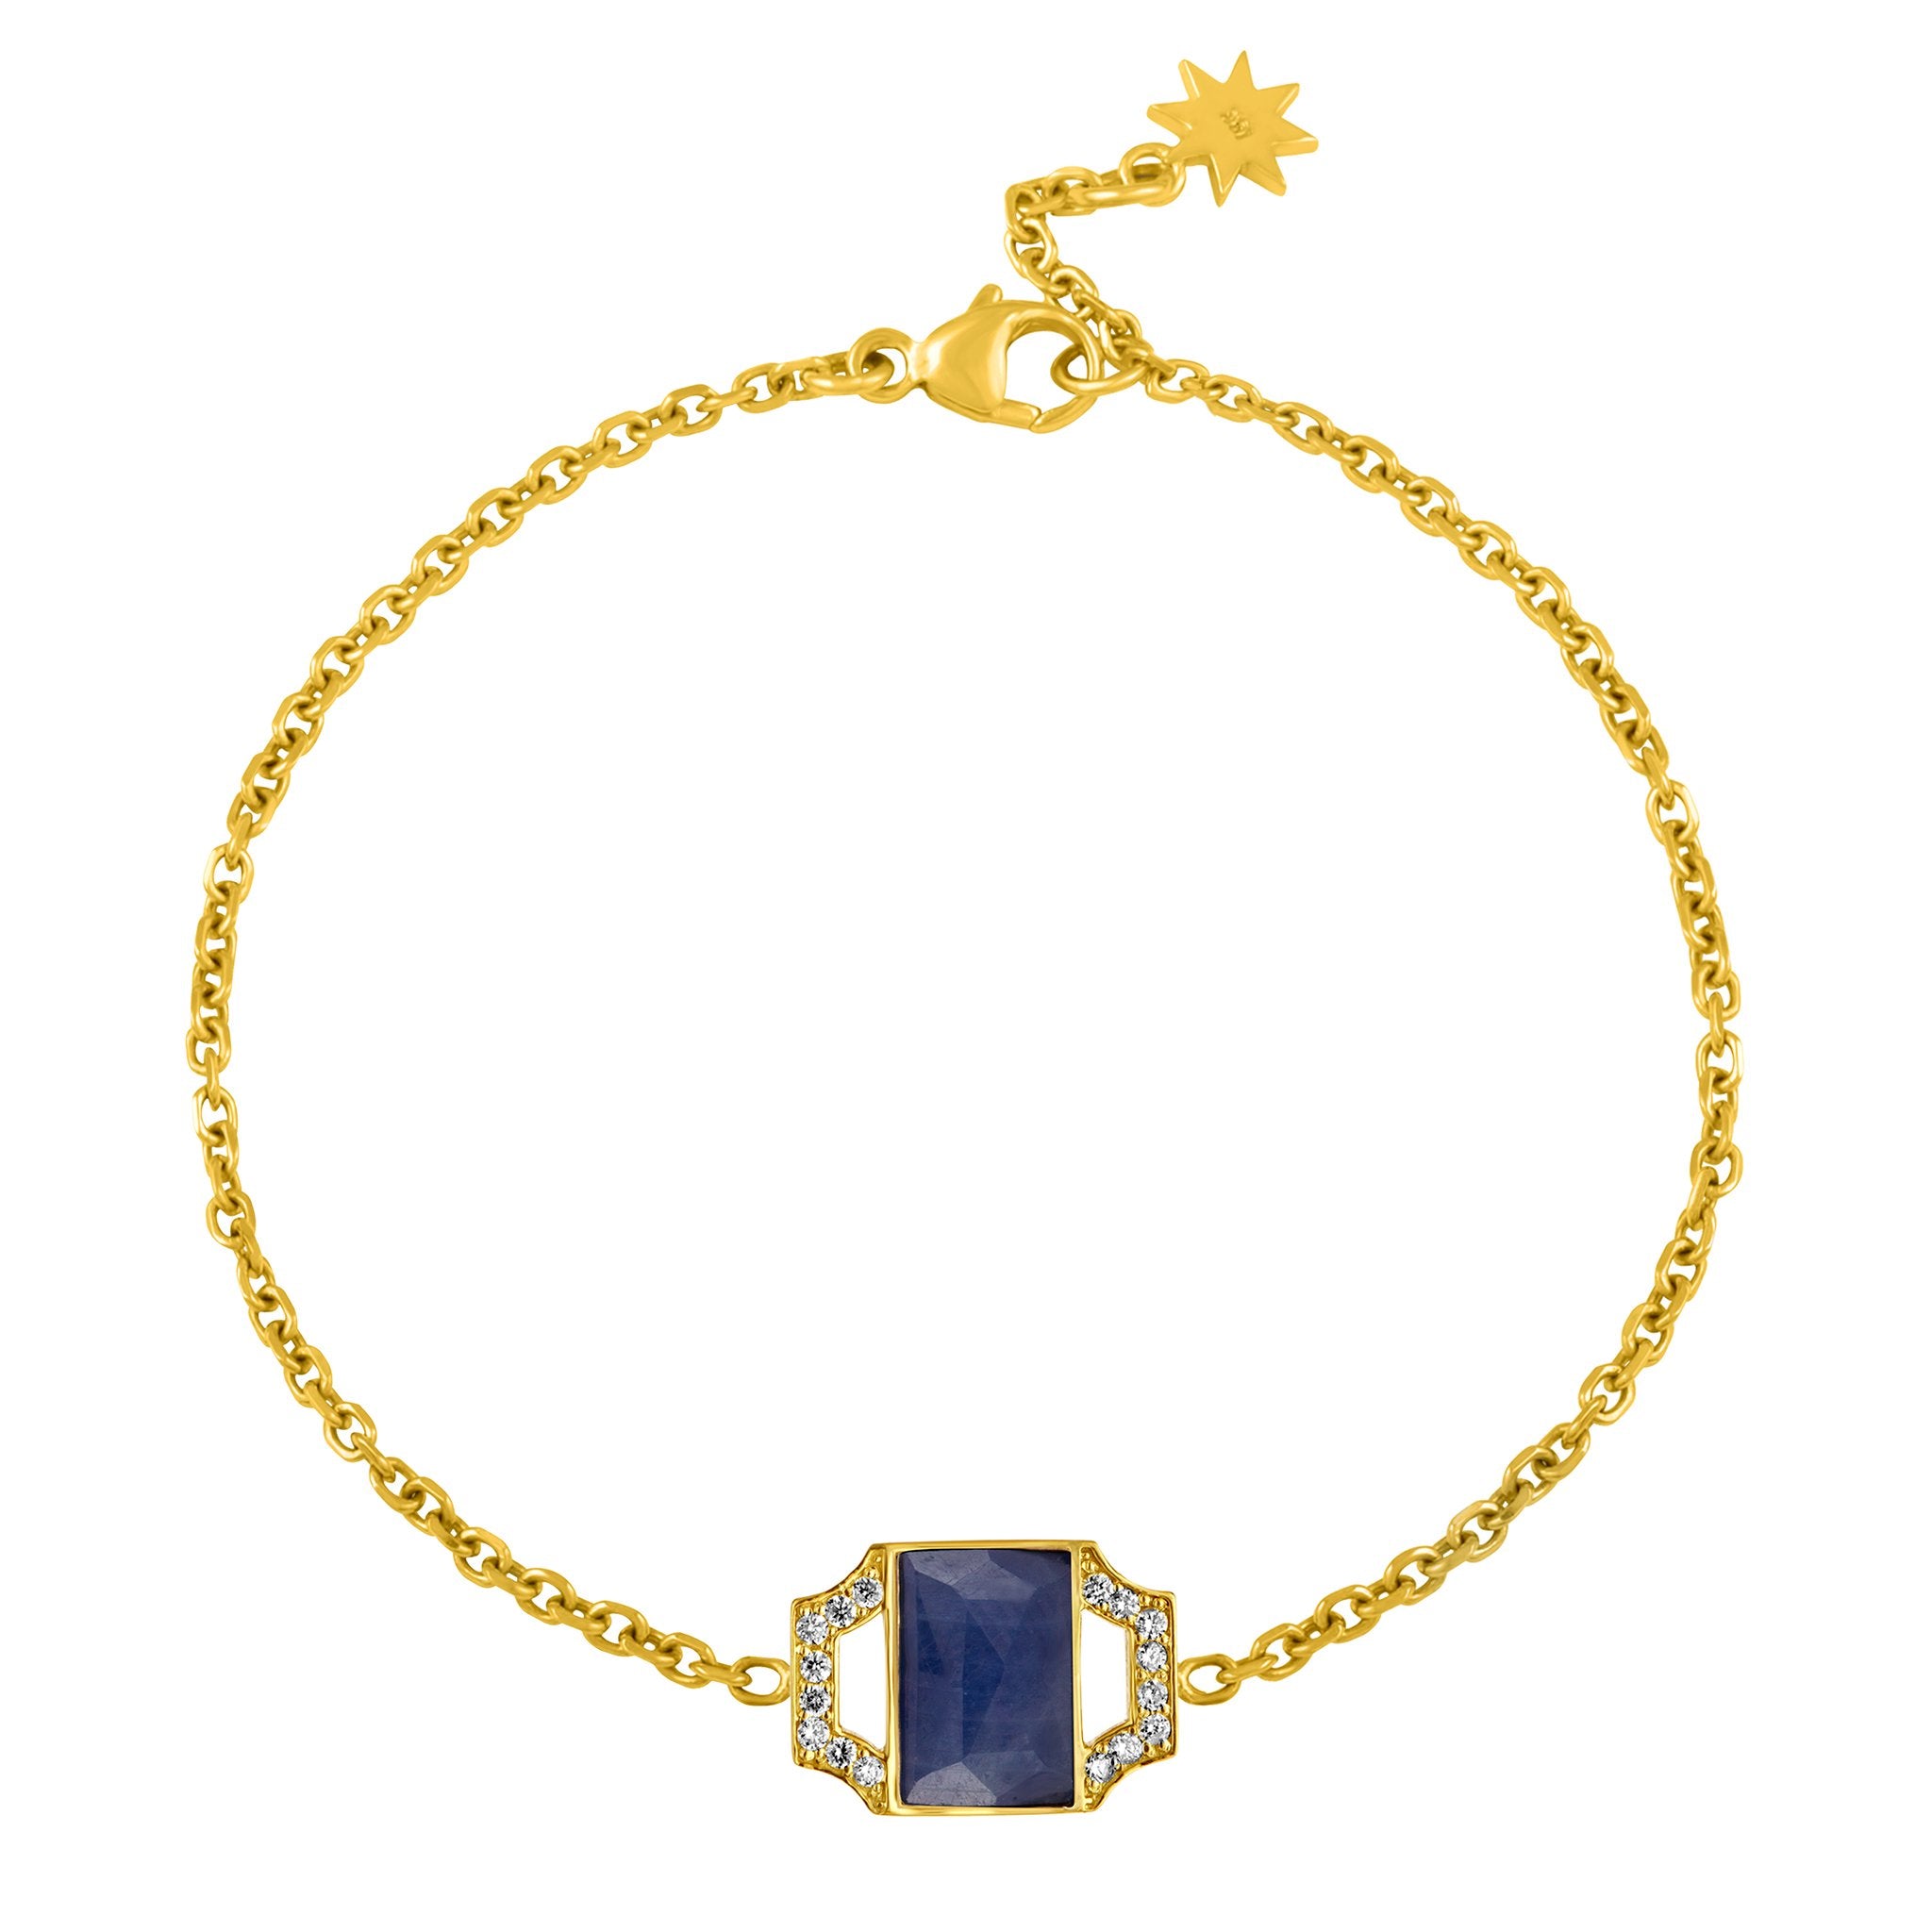 Edge Petite Bracelet: 18k Gold, Sapphire, Diamonds